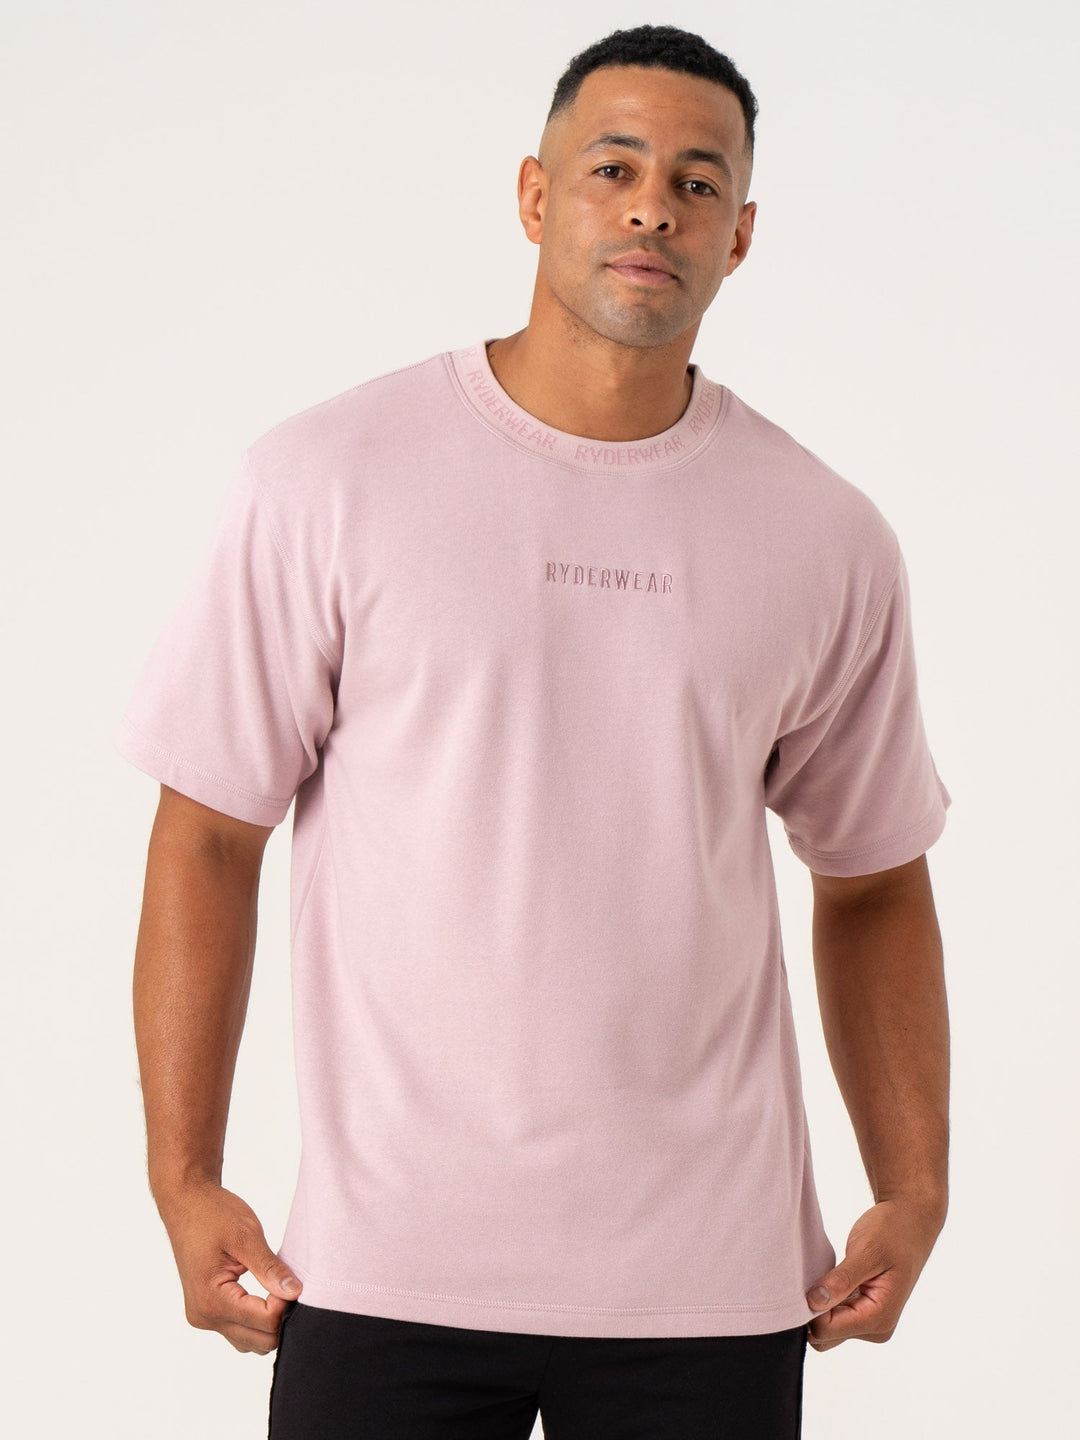 Pursuit Fleece T-Shirt - Cinder Clothing Ryderwear 